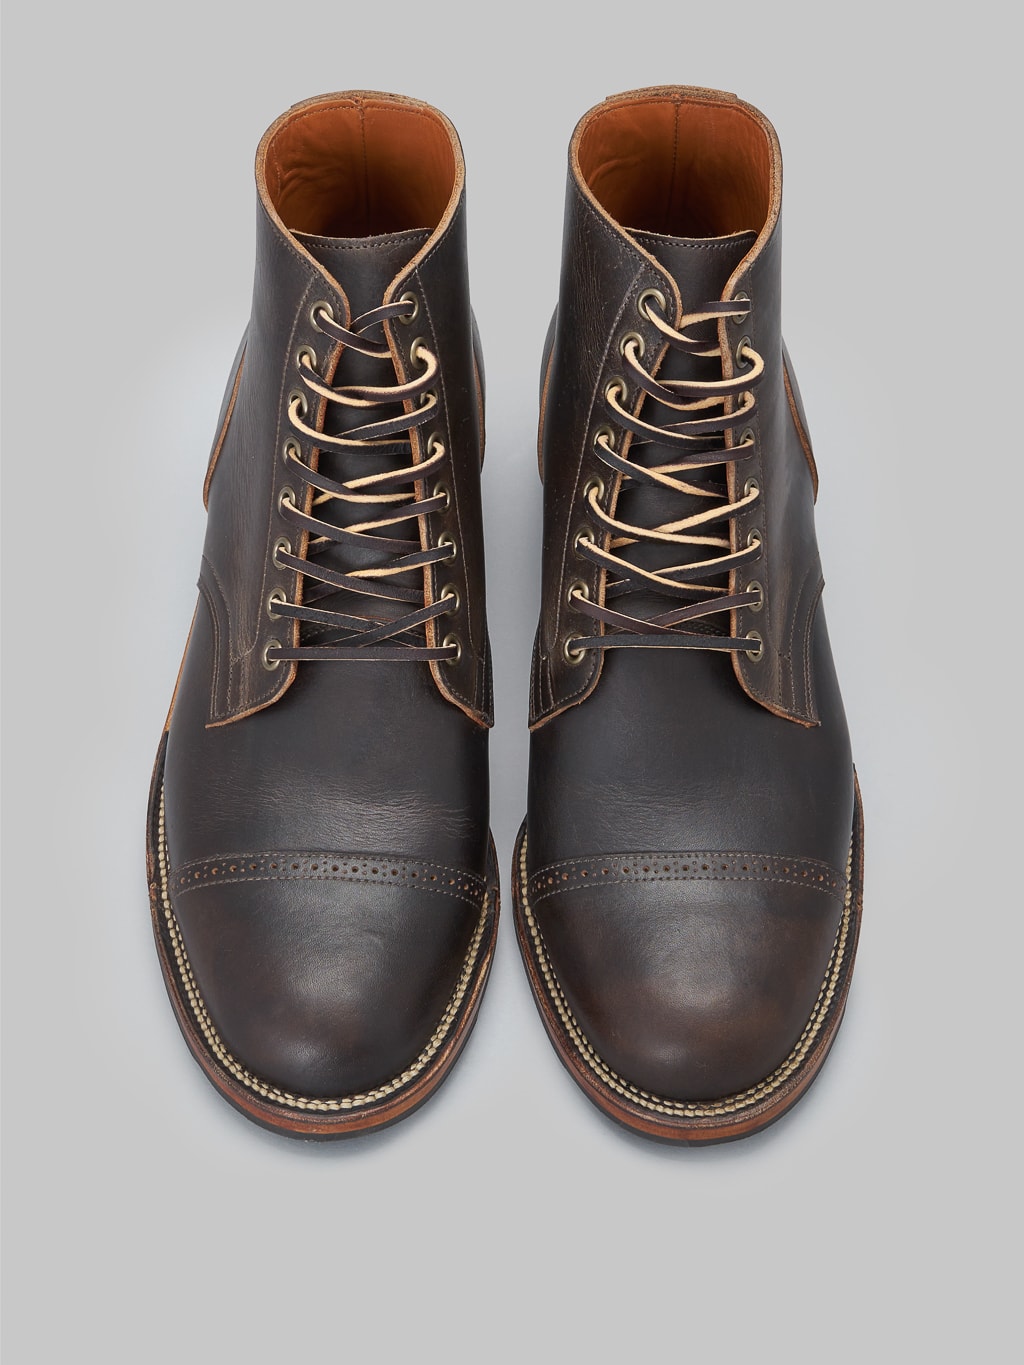 viberg service boot 2023 bct antique phoenix dark brown leather laces